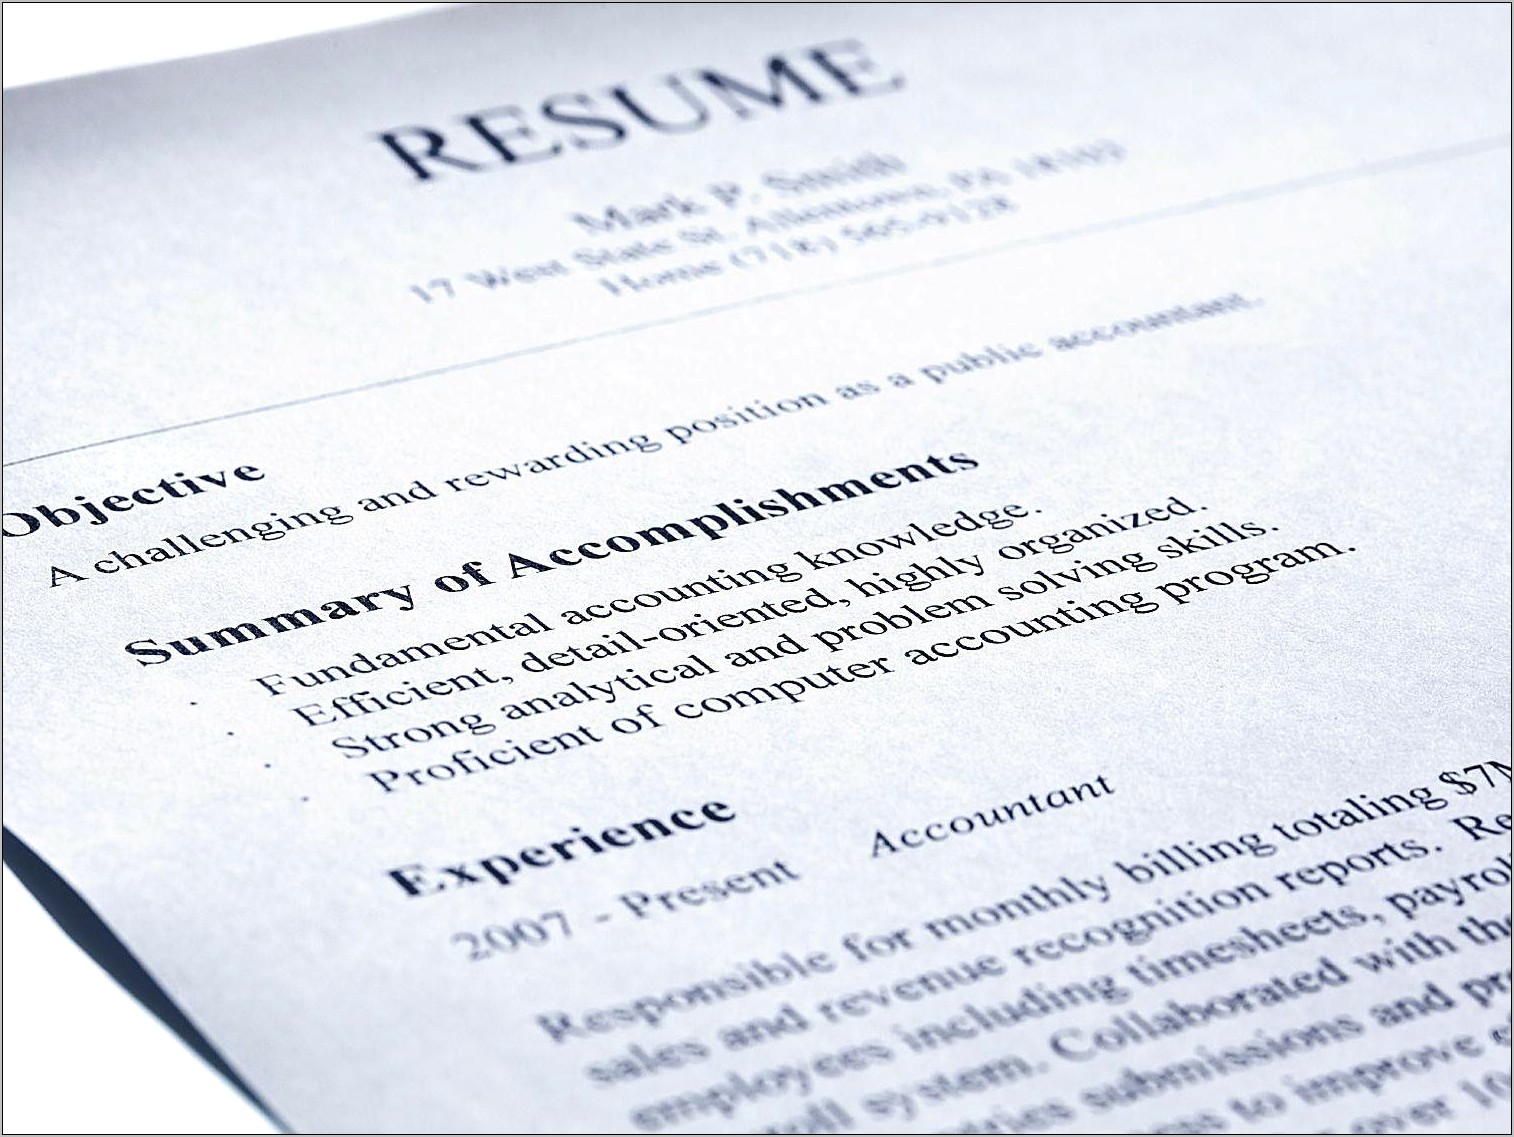 Sample Resume Objective For Maintenance Position